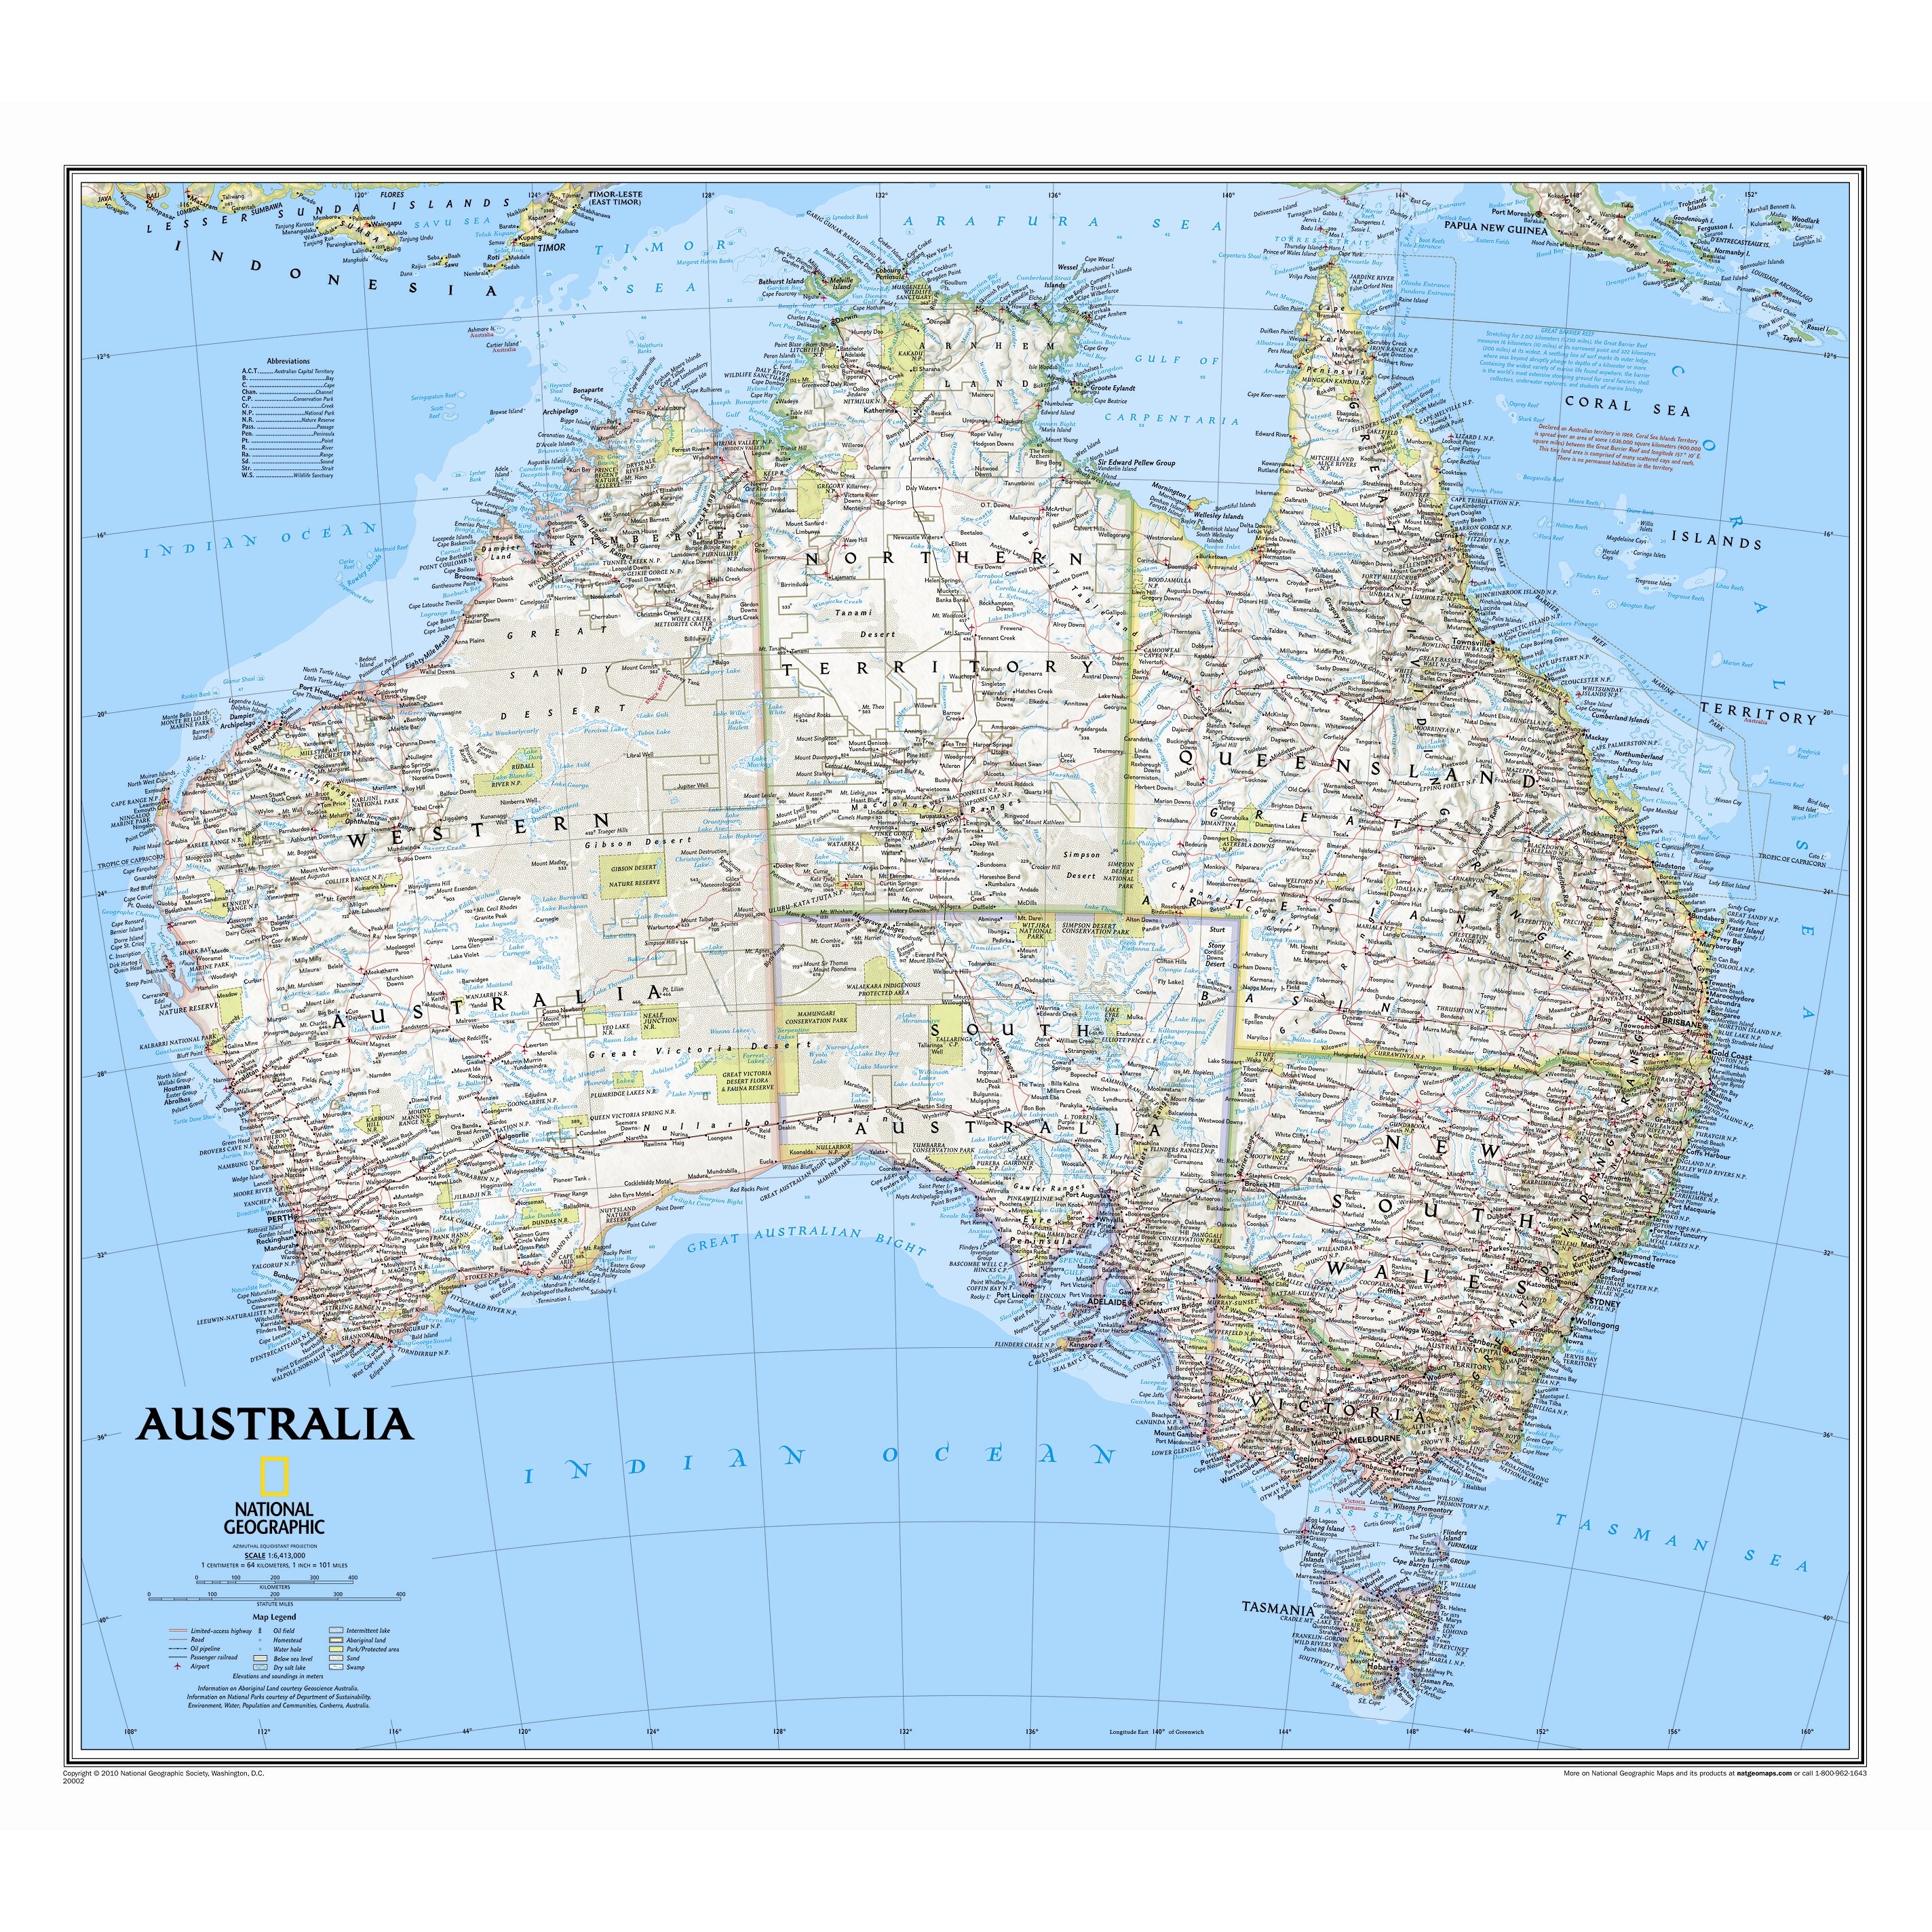 national-geographic-maps-australia-classic-wall-map-wayfair-gambaran